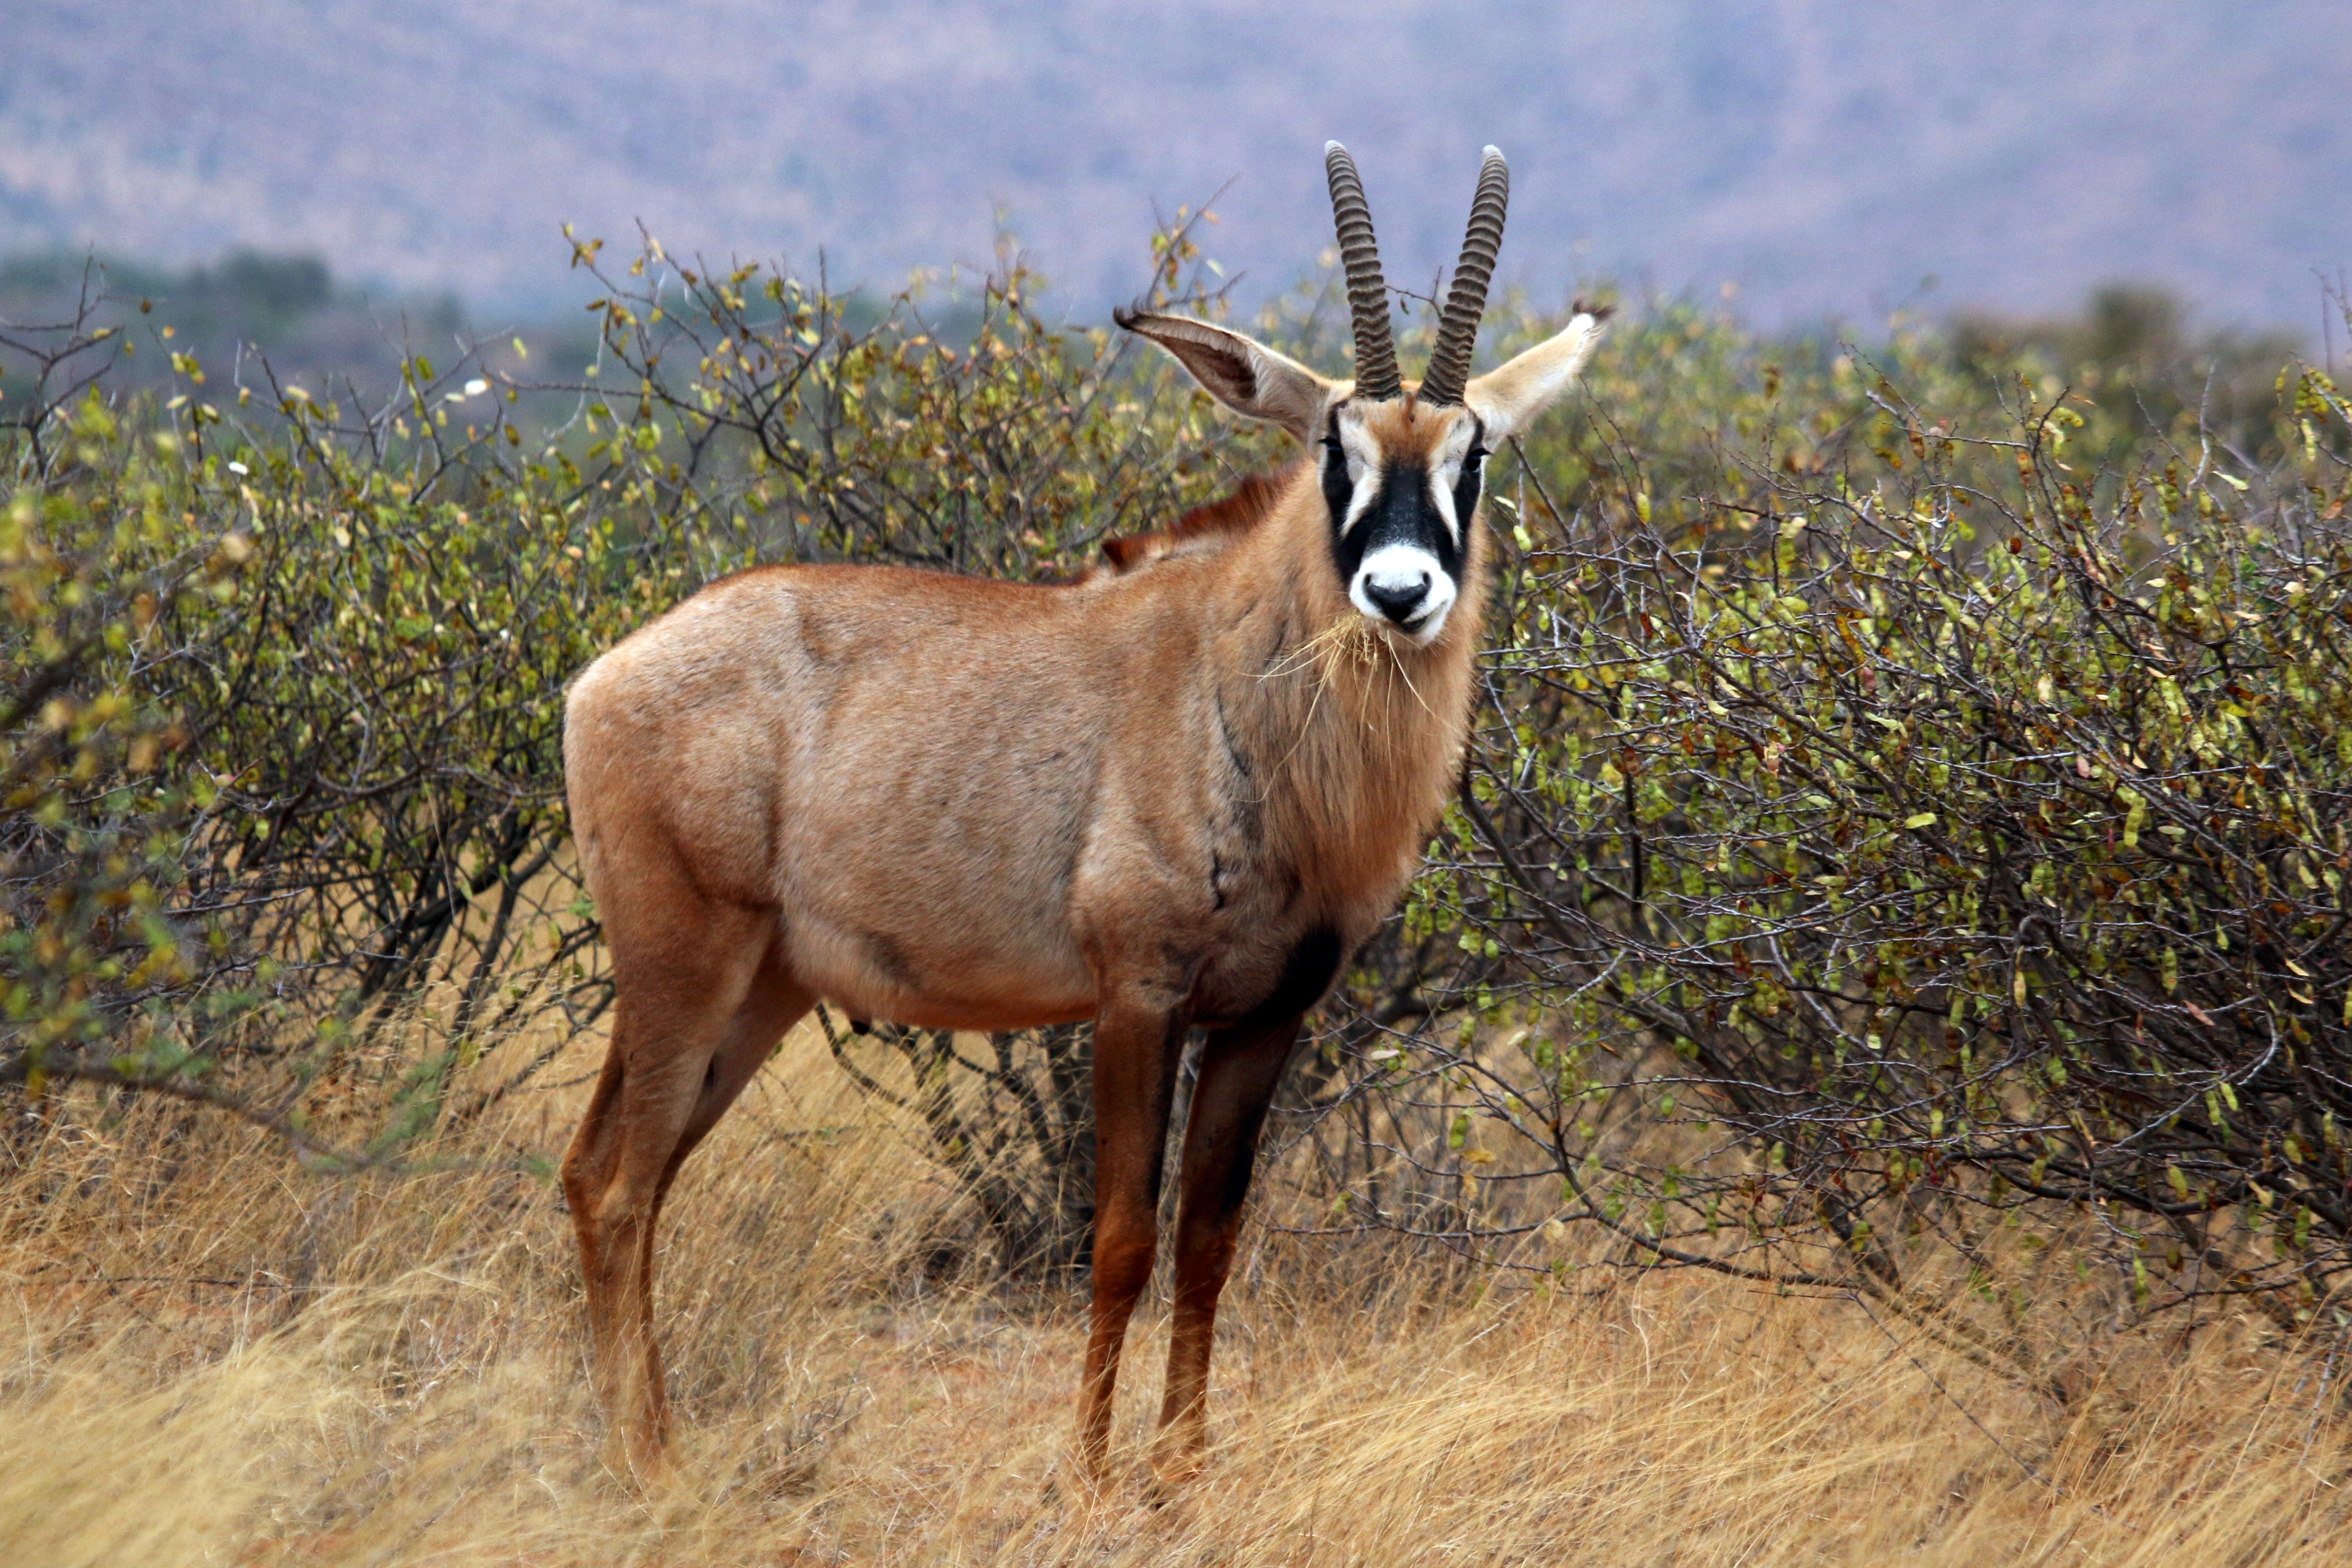 Roan antelope - Wikipedia